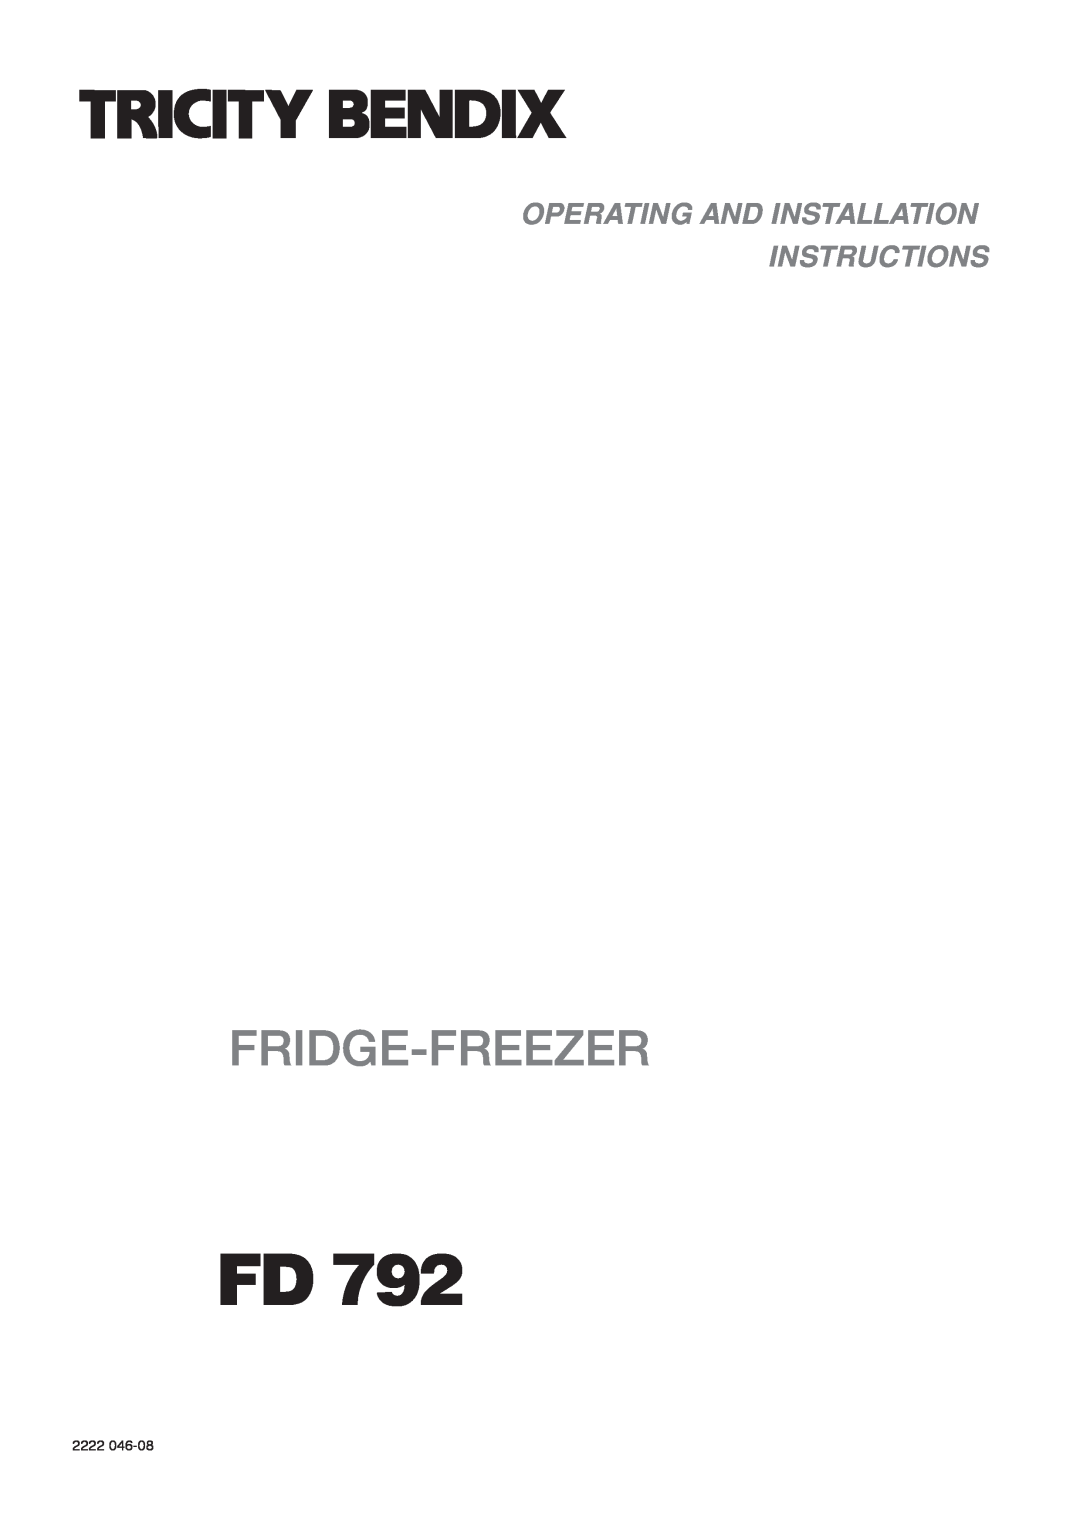 Tricity Bendix FD 792 installation instructions Fridge-Freezer, Operating And Installation Instructions, 2222 